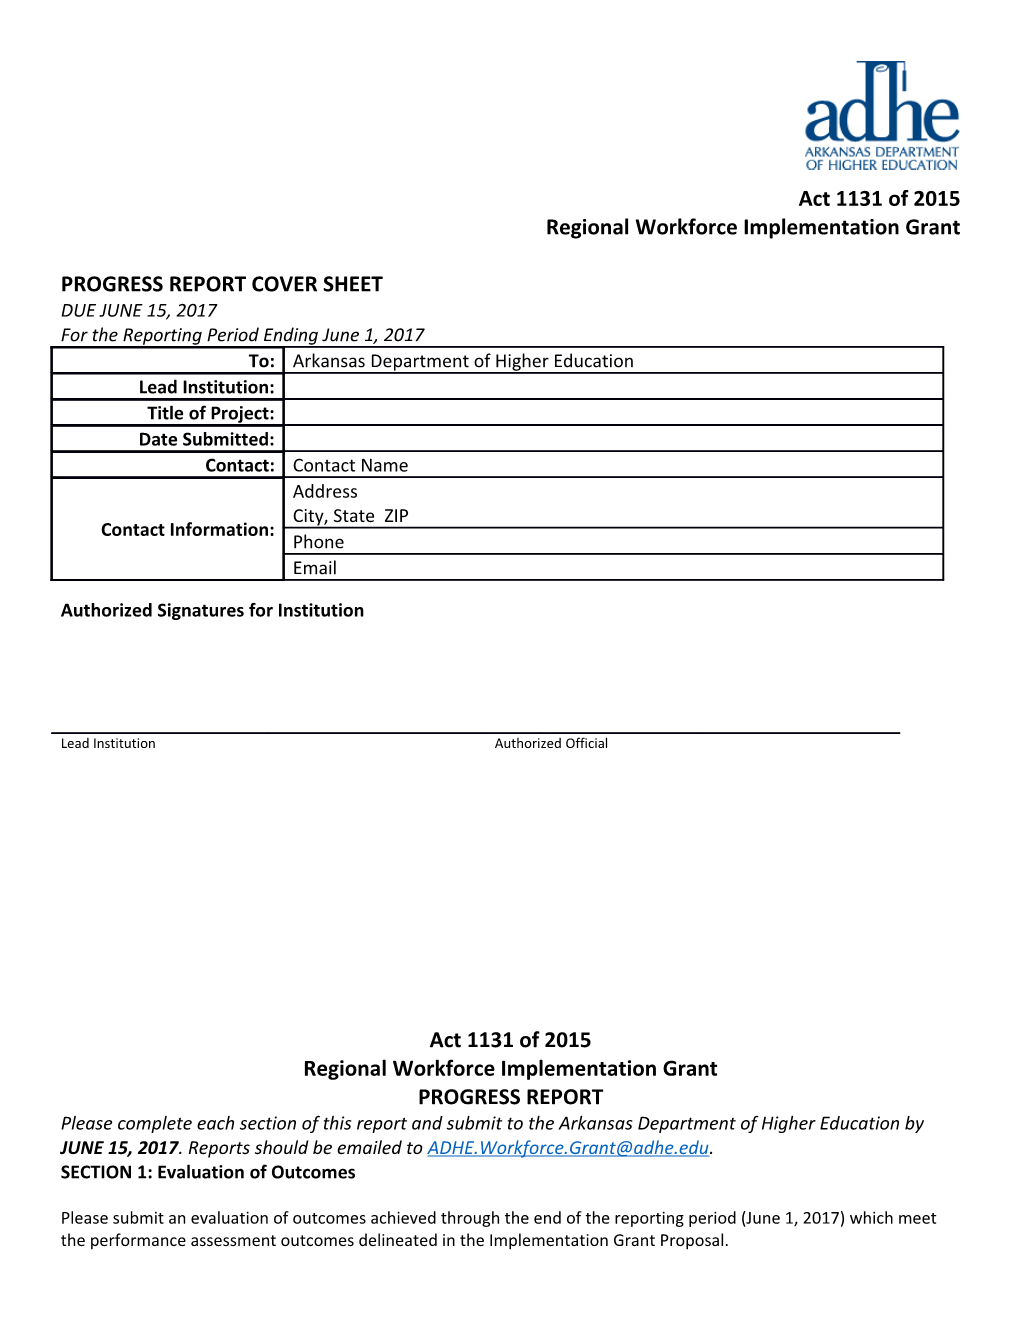 Act 1131 of 2015 Regional Workforce Implementation Grant